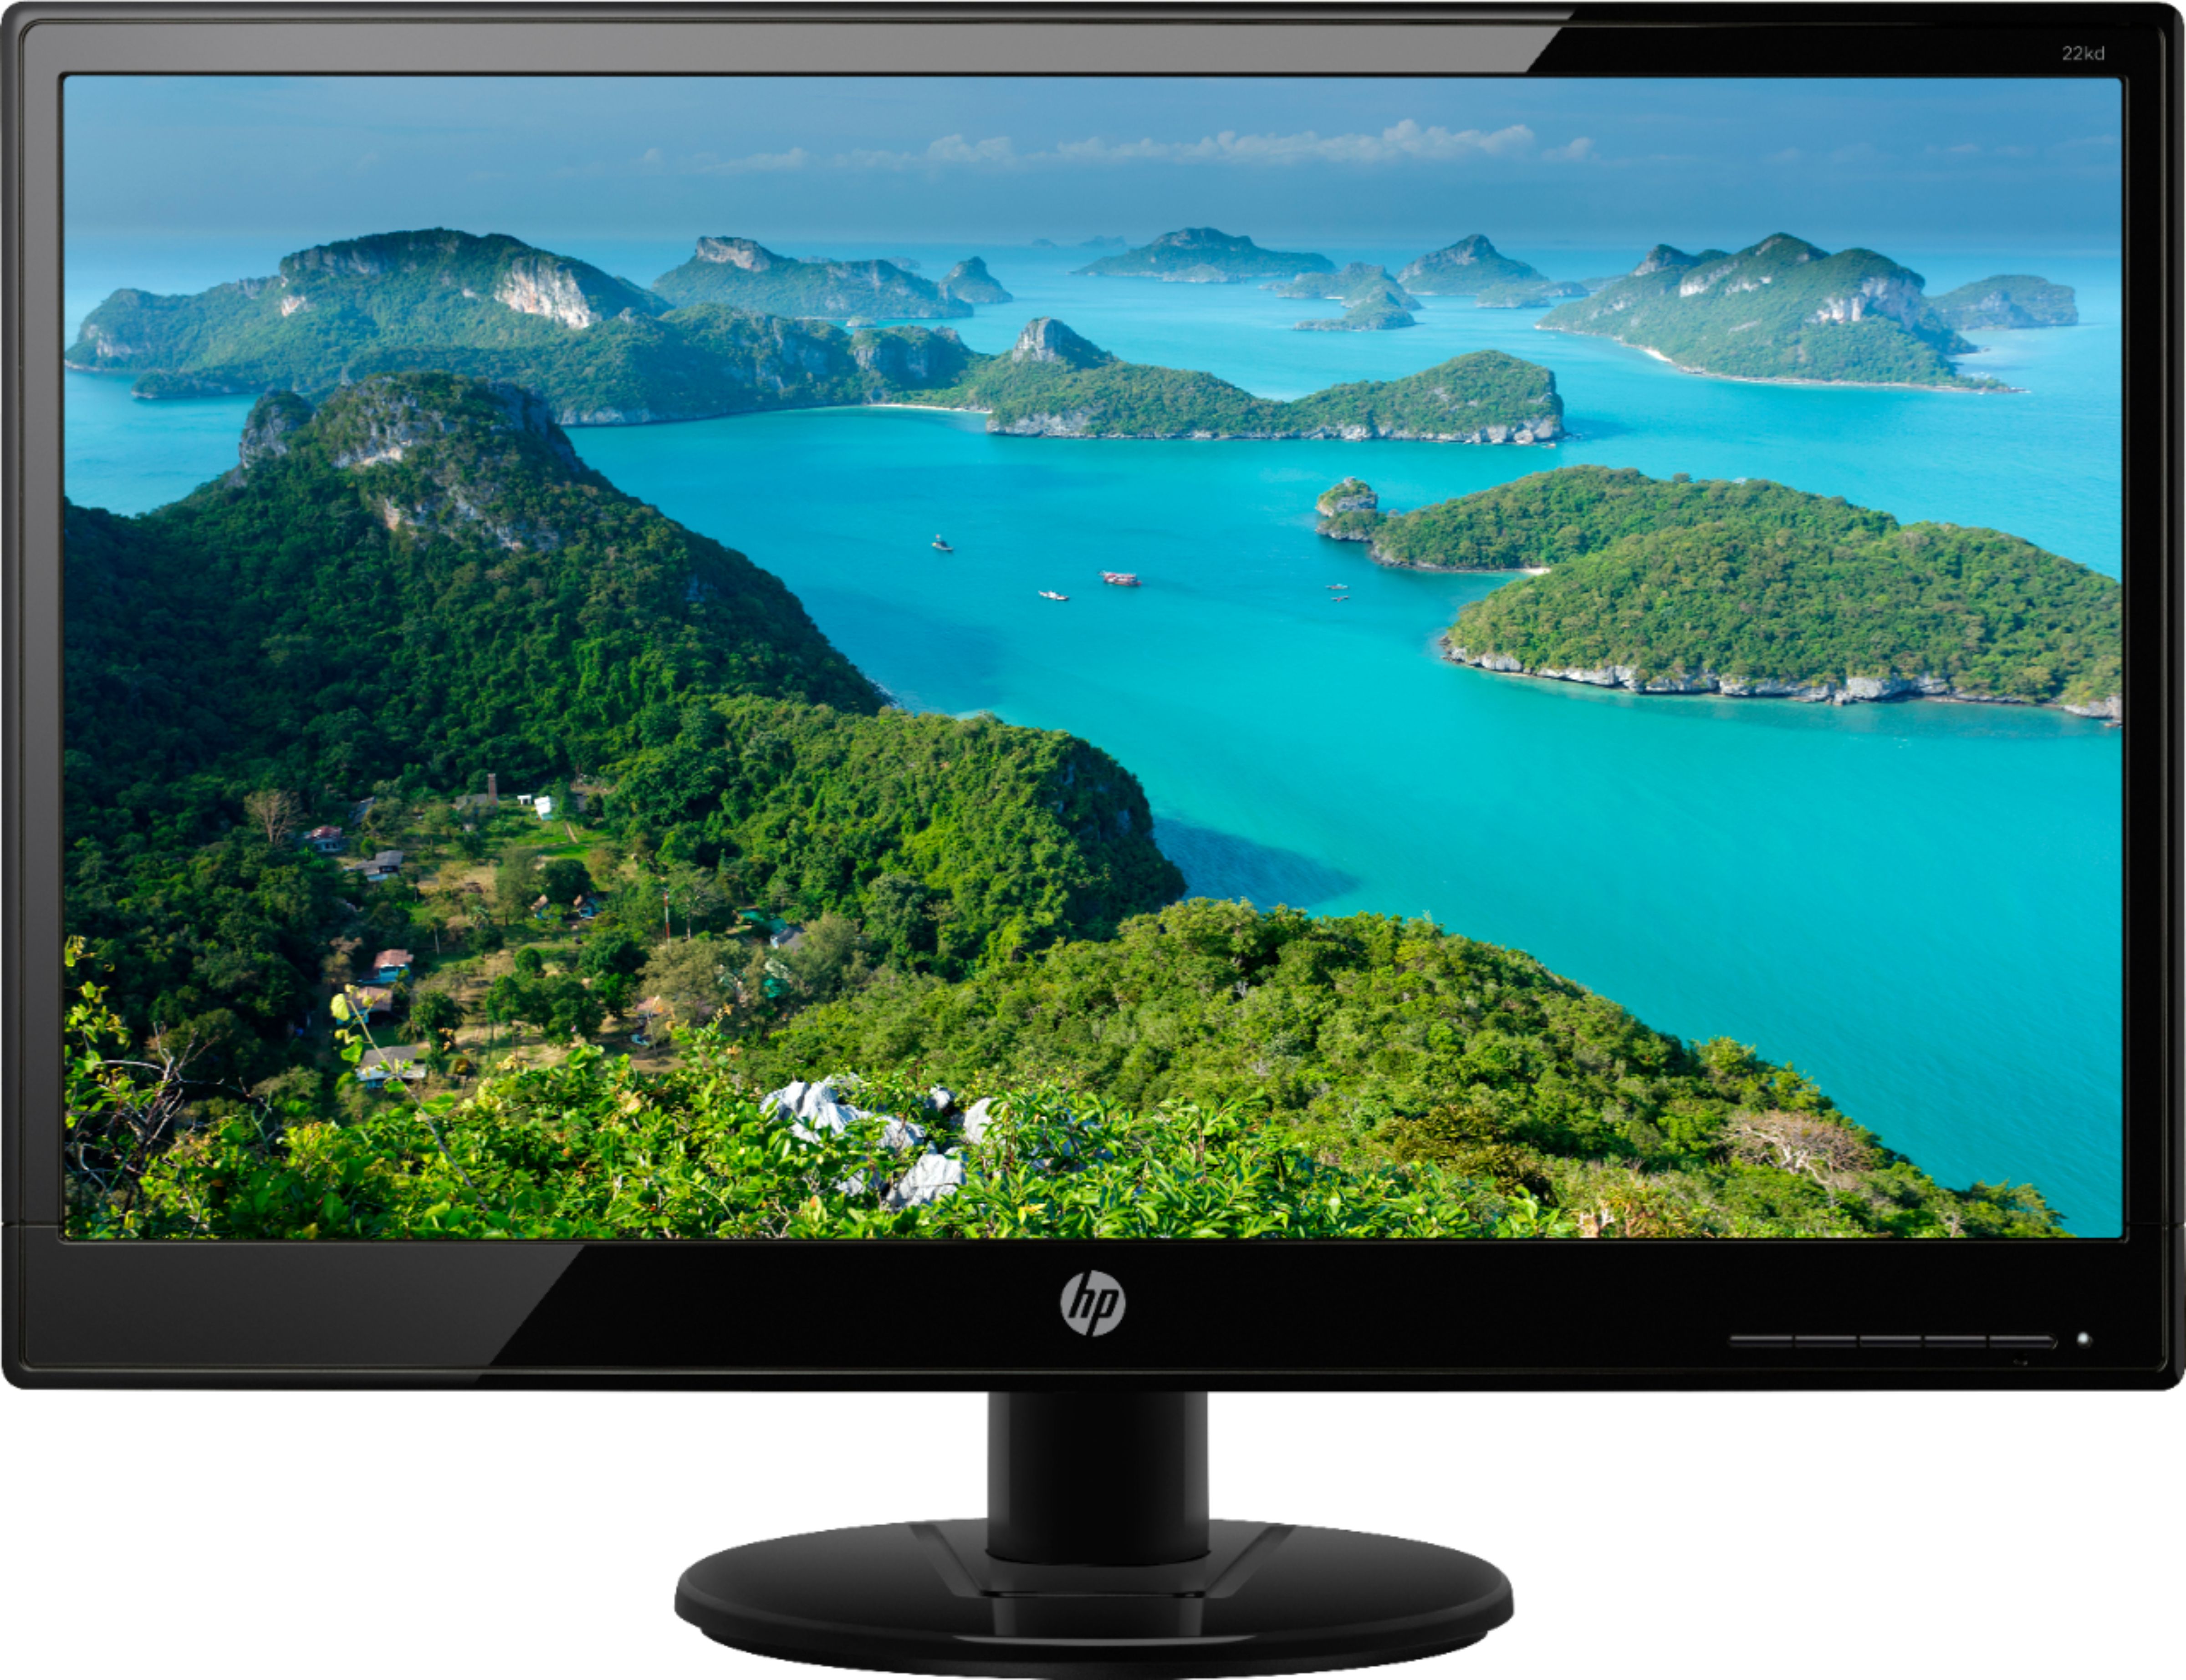 HP - 20.7" LED FHD Monitor (DVI, VGA) - Black